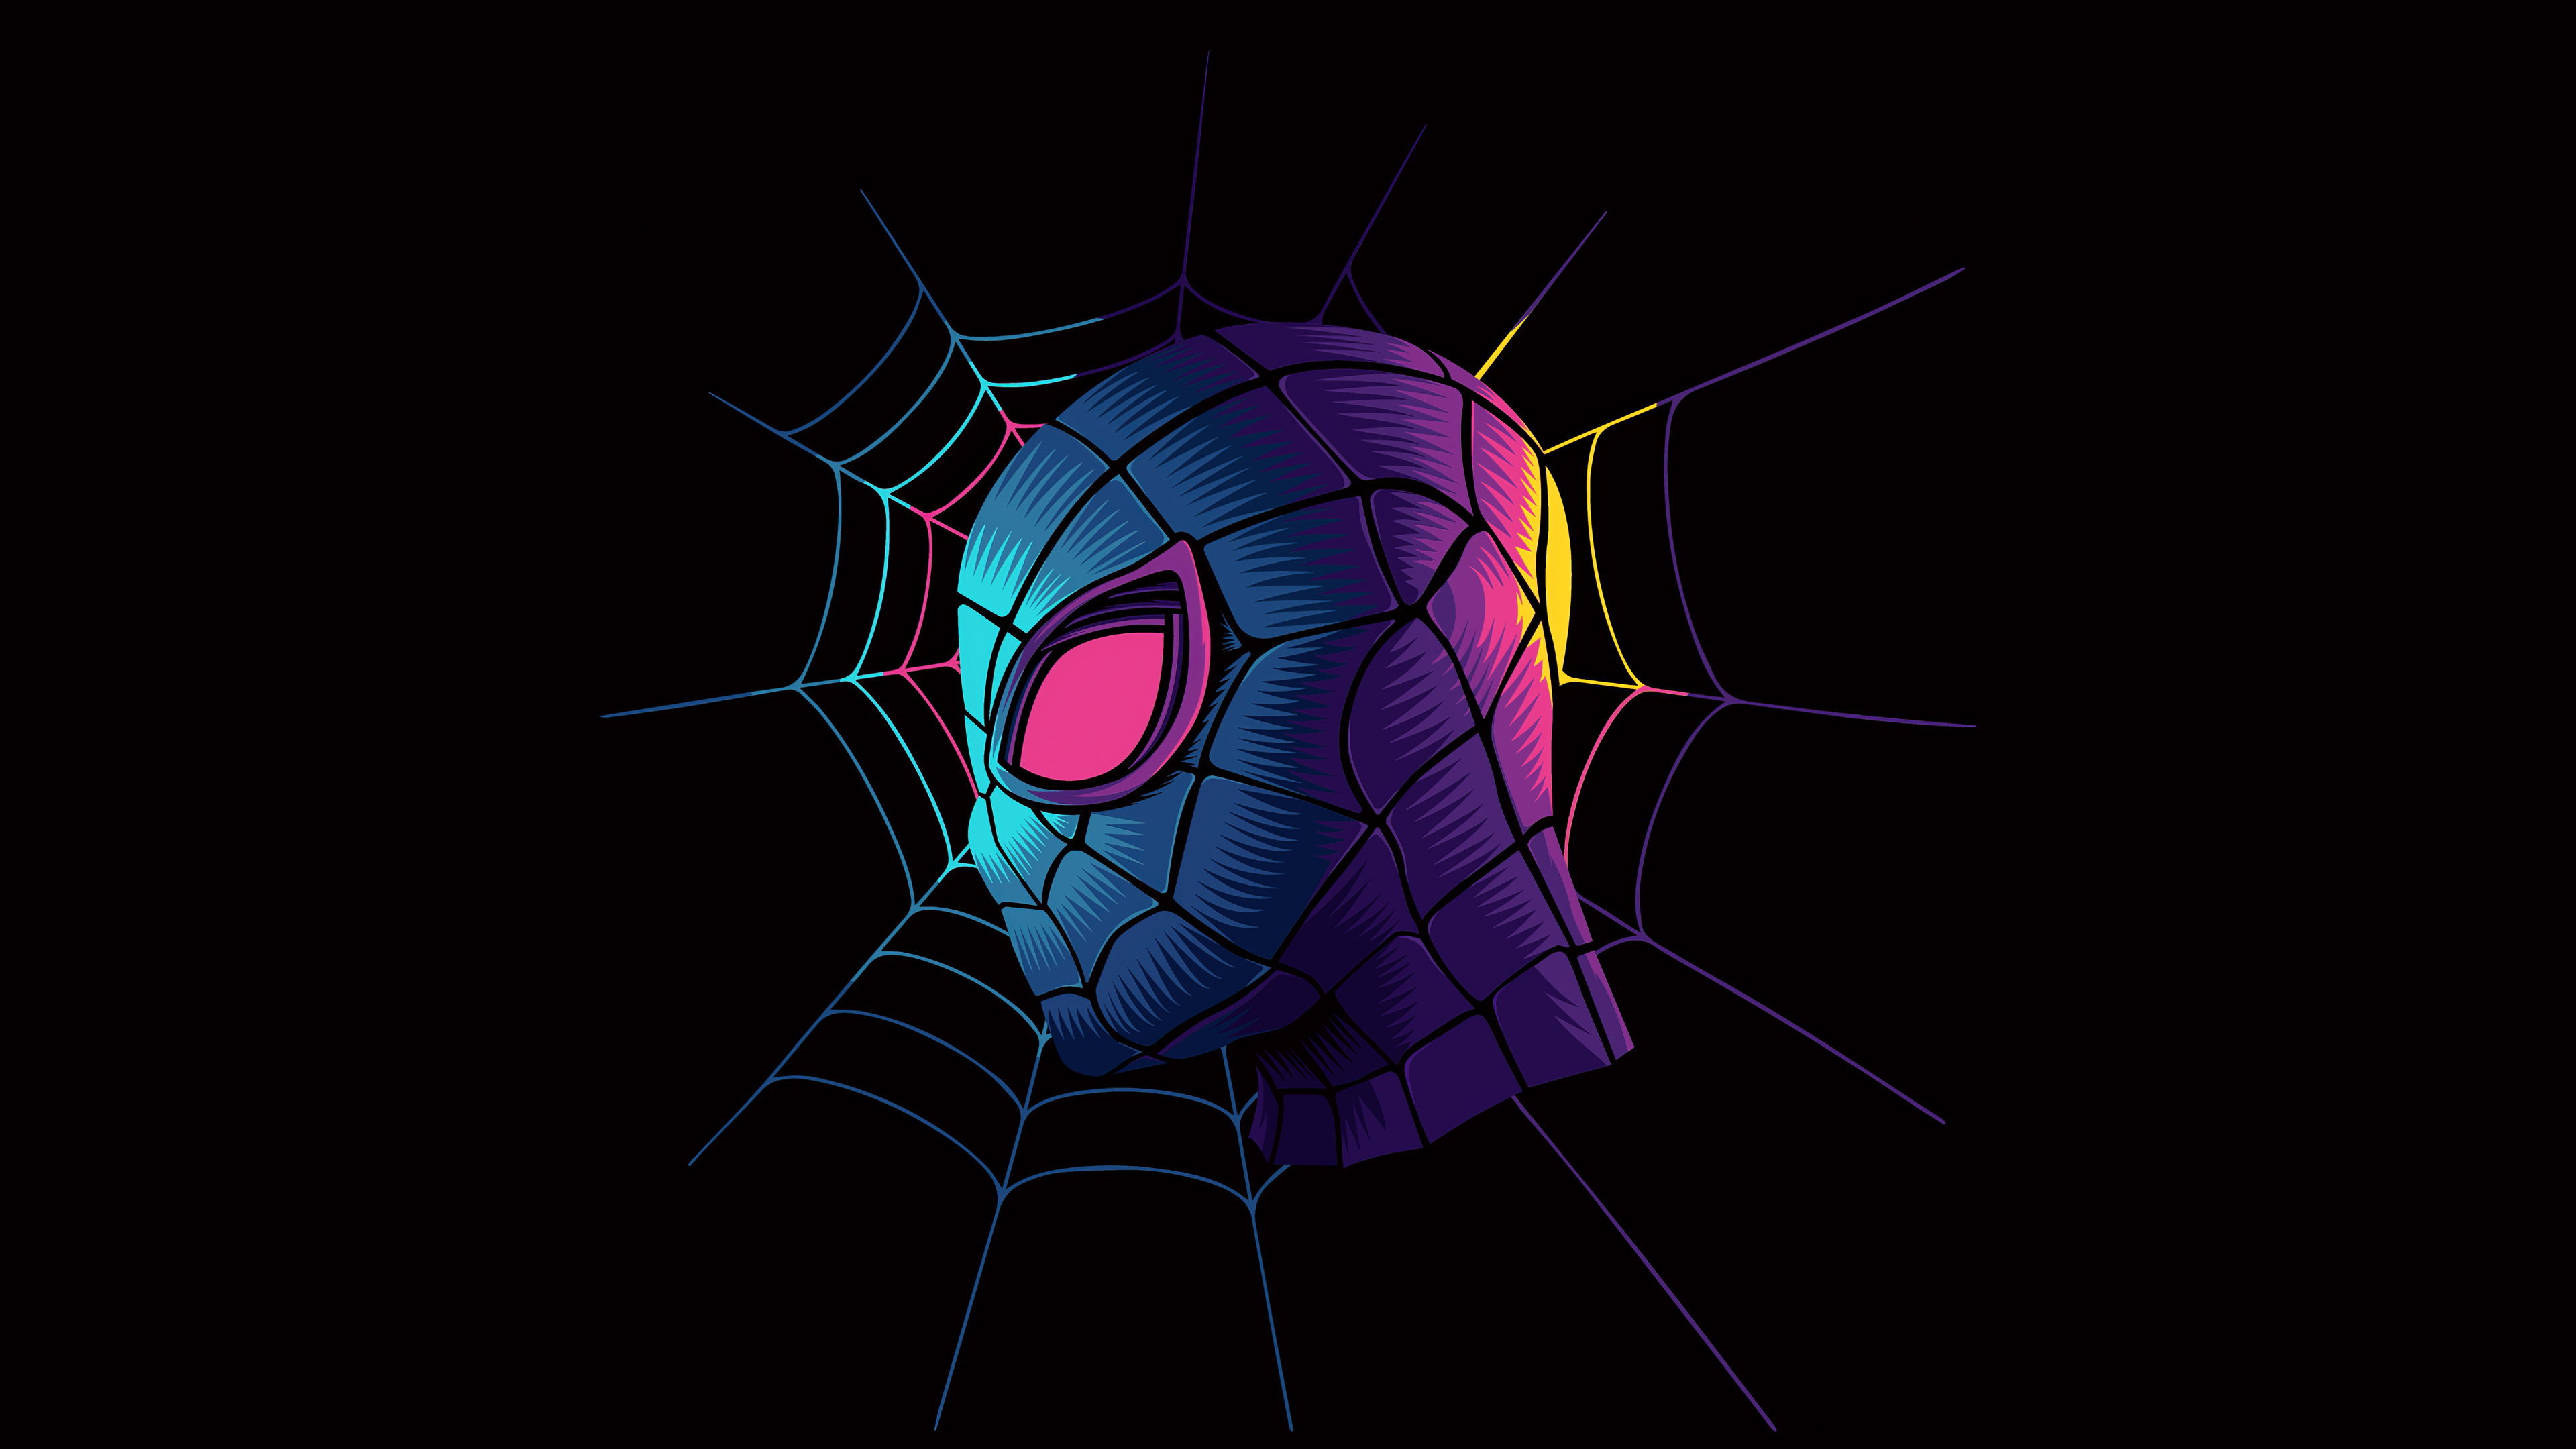 Spiderman Web Minimalist Art 4k Hd Superheroes 4k Wallpapers Images